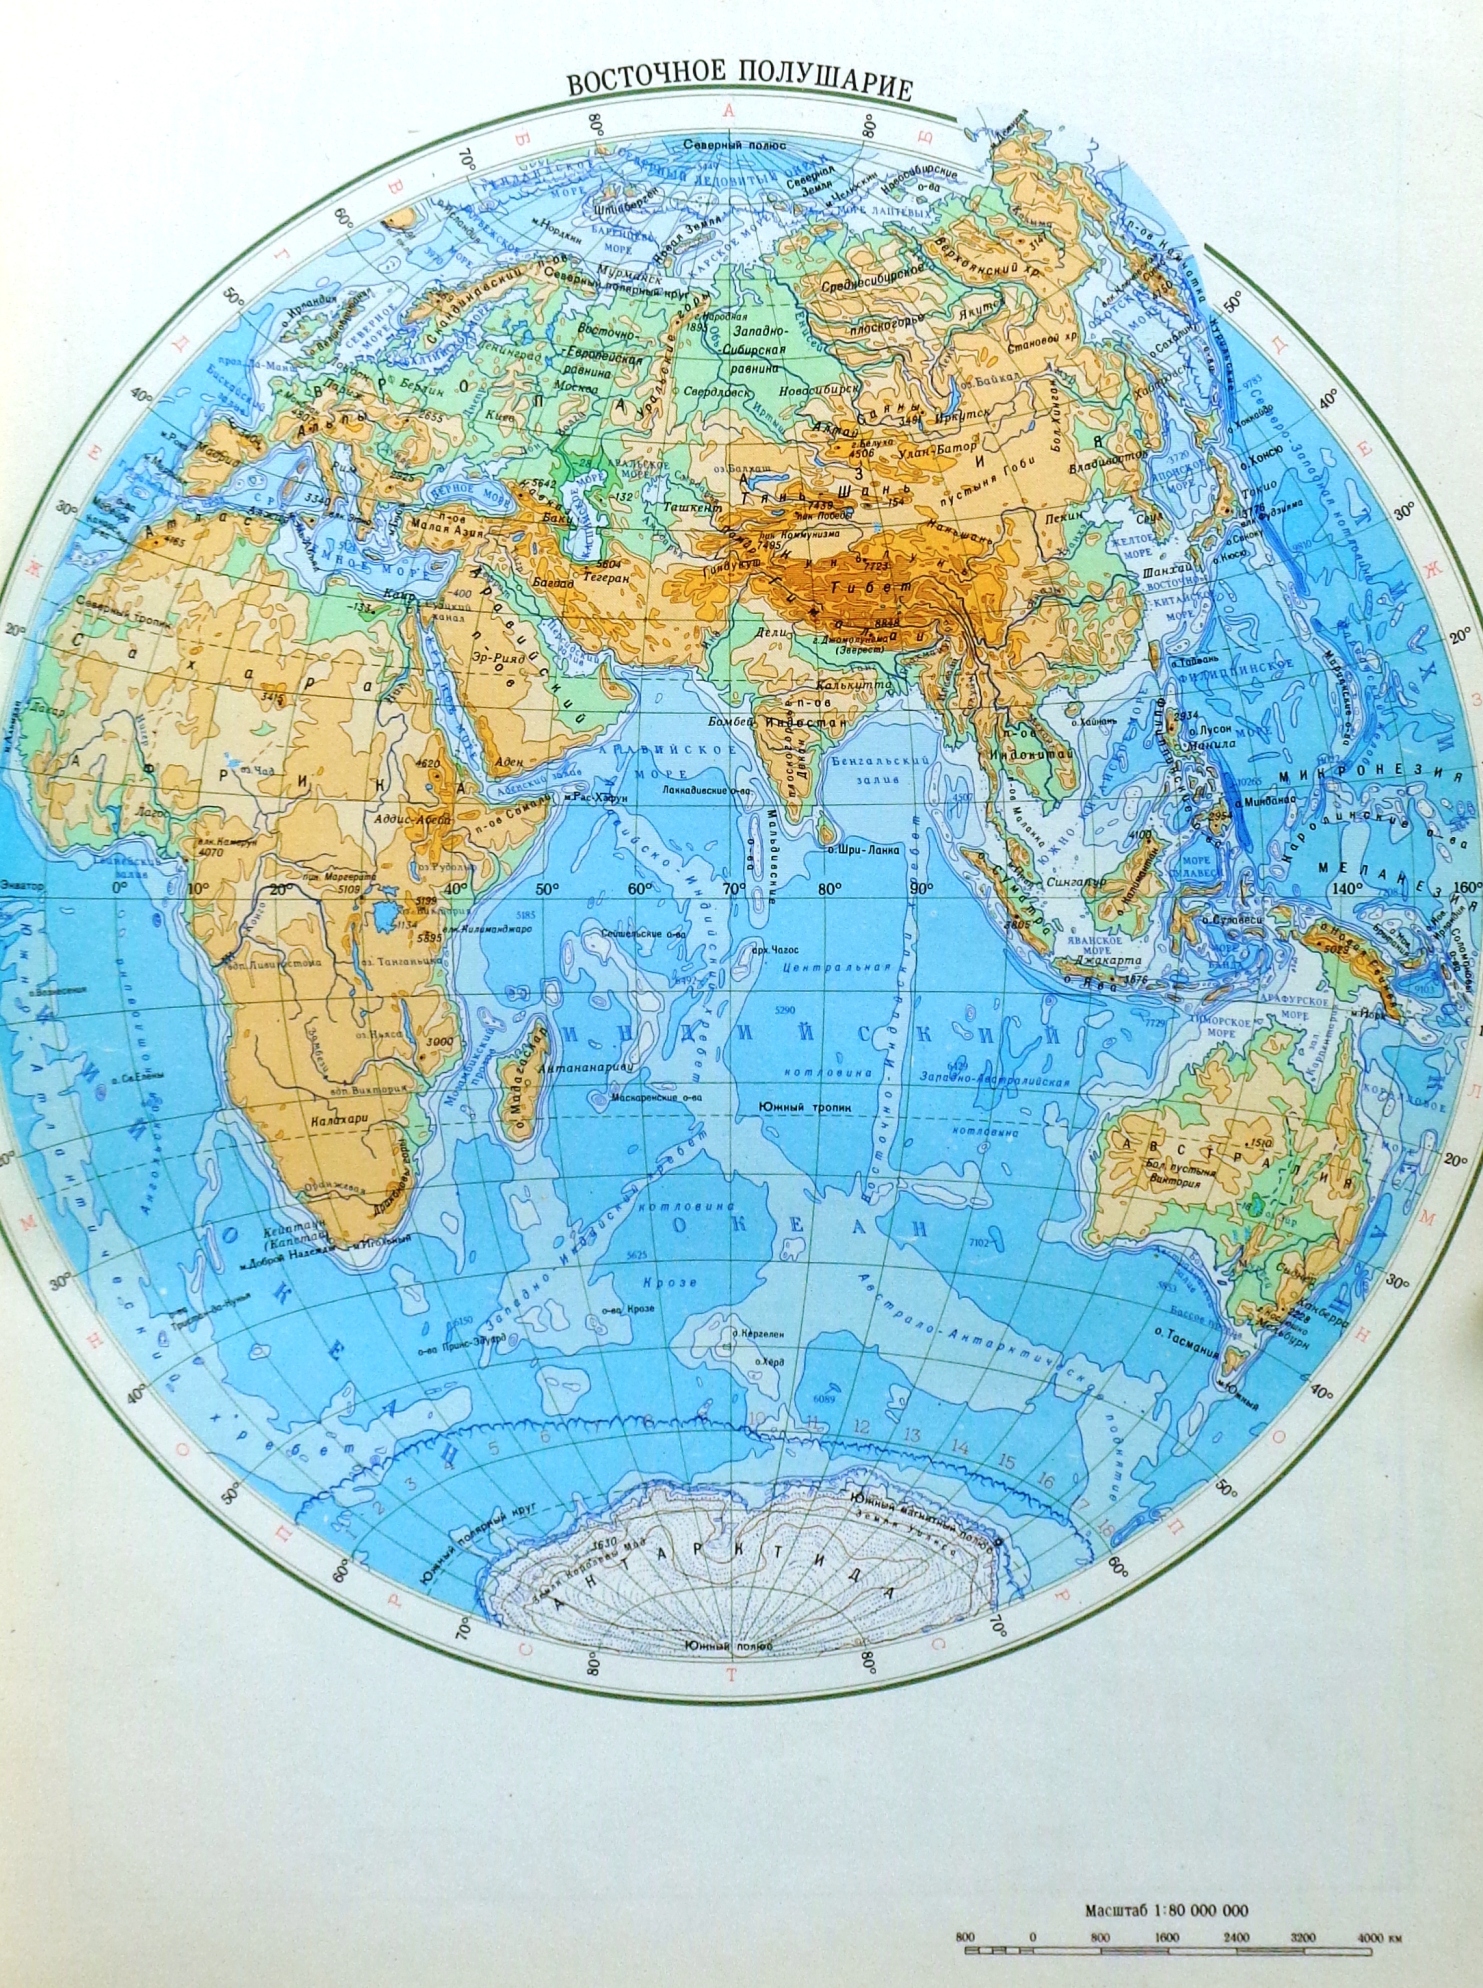 Карта полушарий крупно